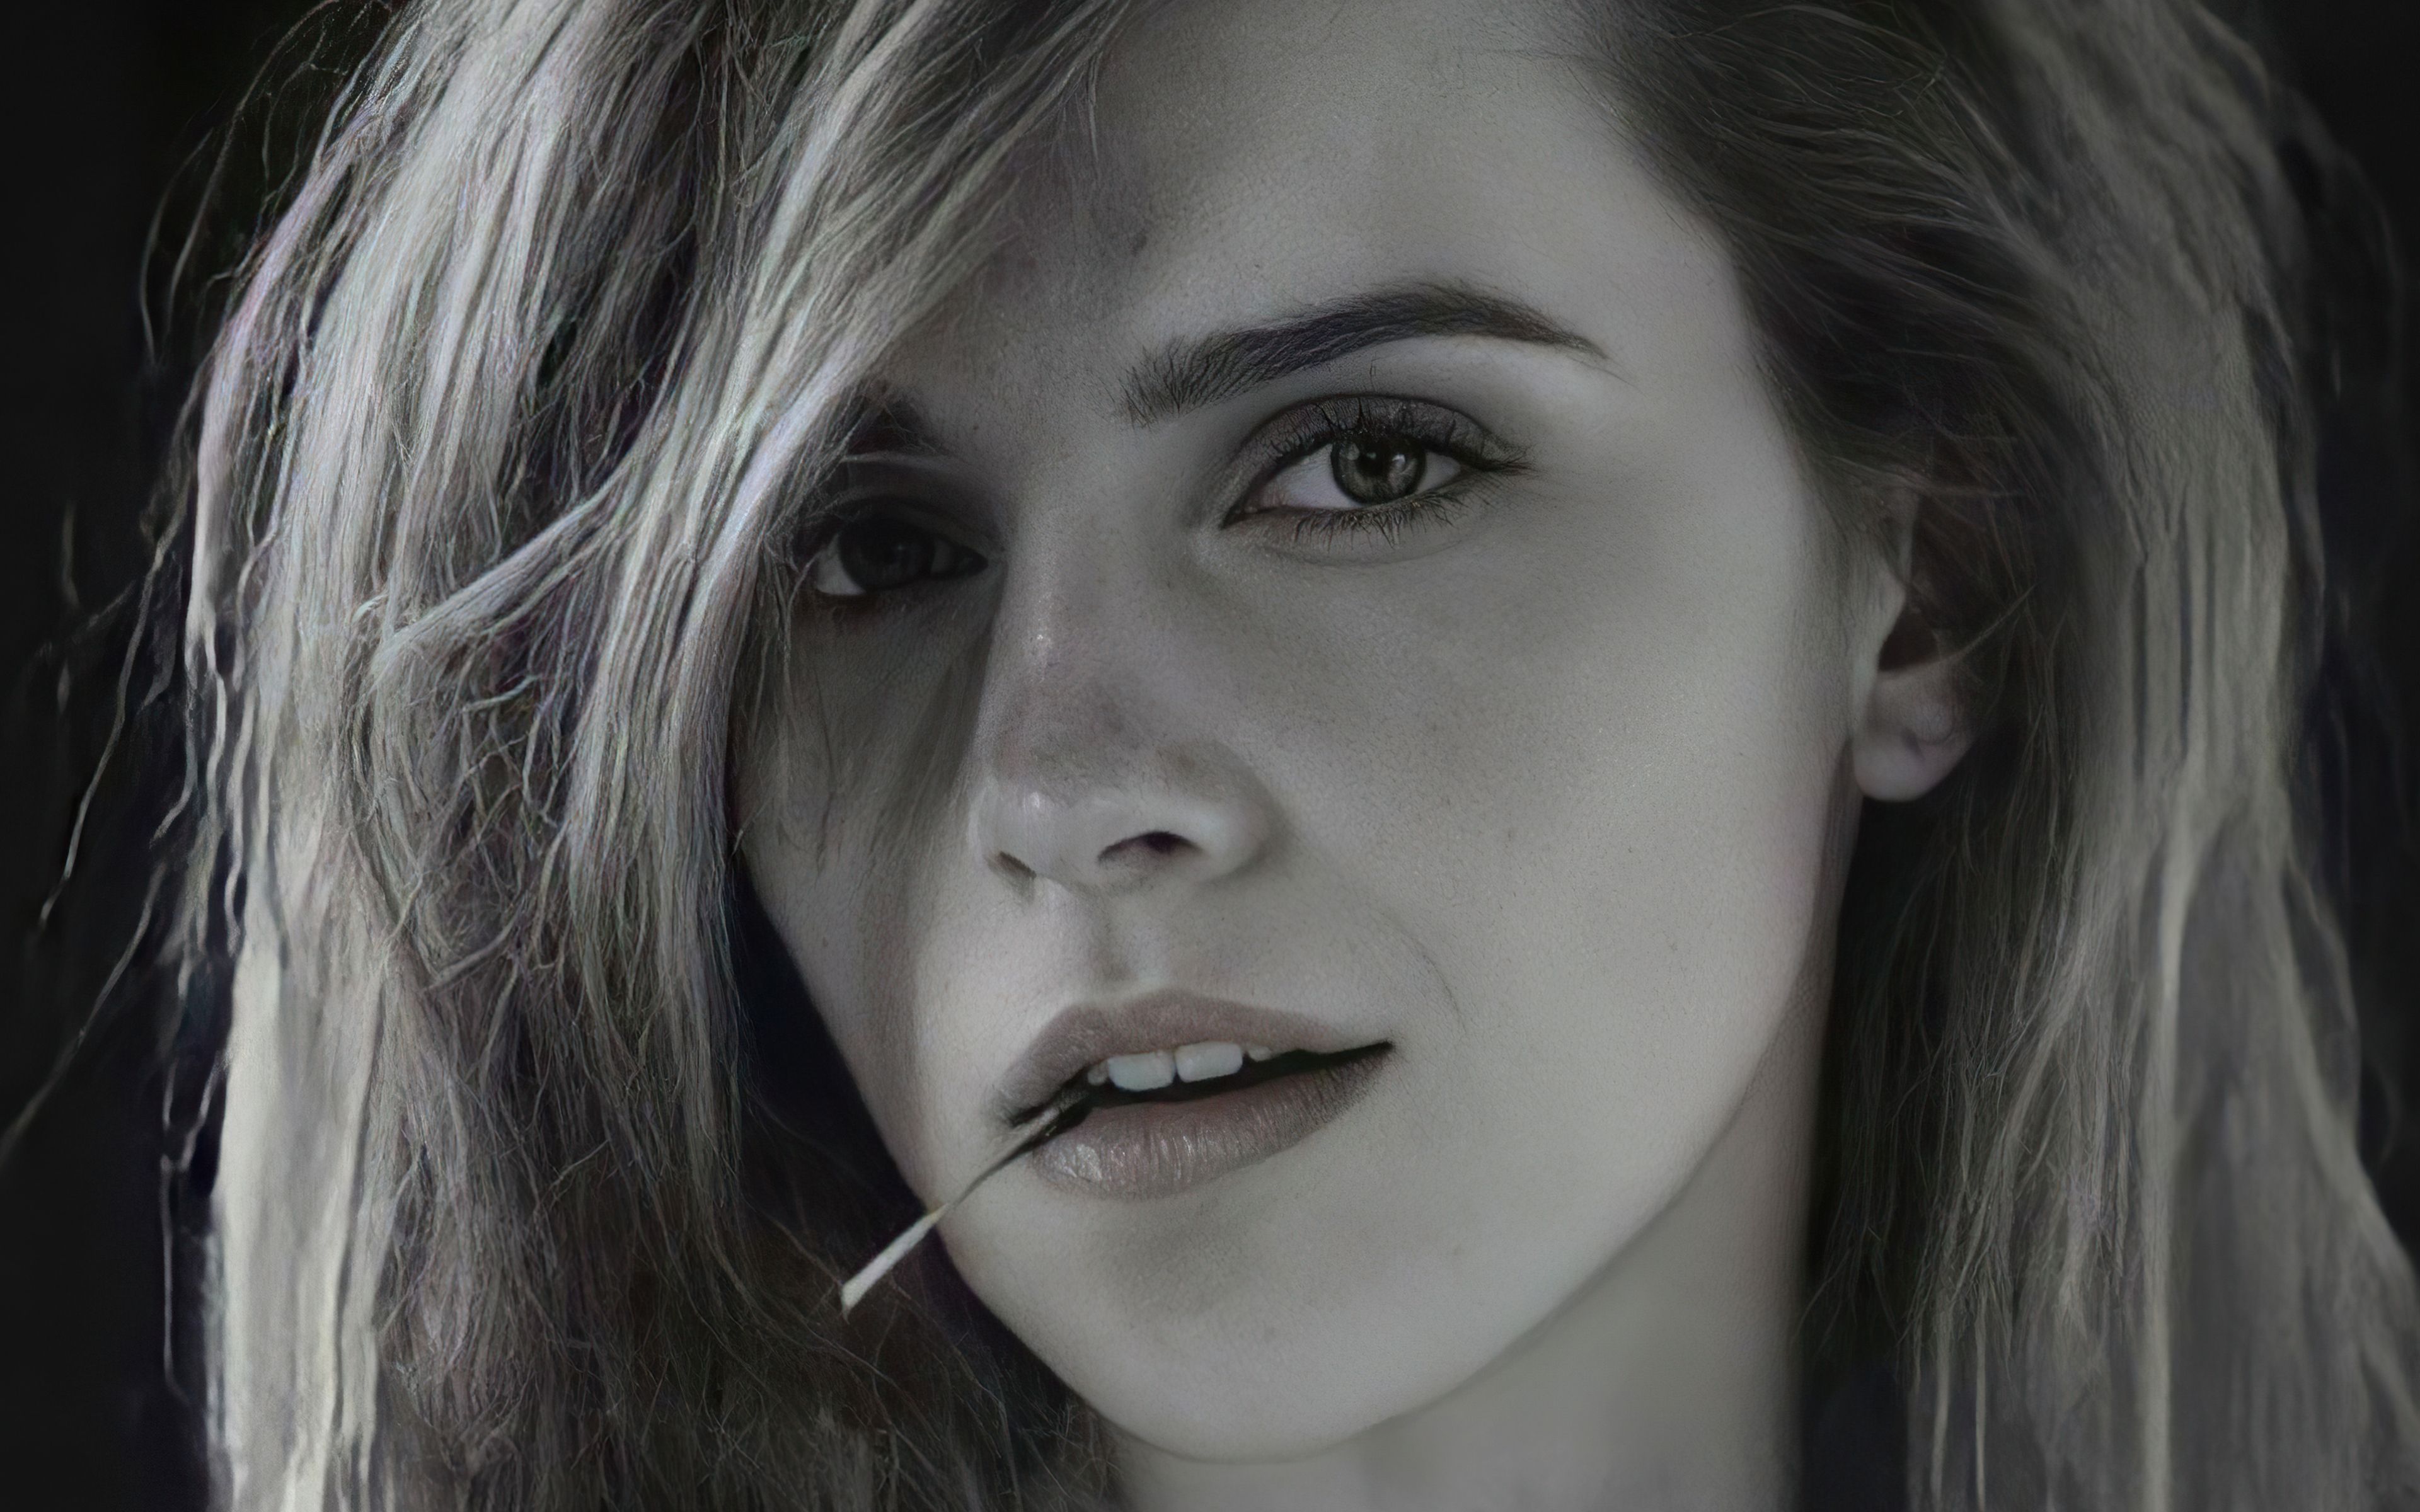 Emma Watson Monochrome 2020 4k HD 4k Wallpaper, Image, Background, Photo and Picture